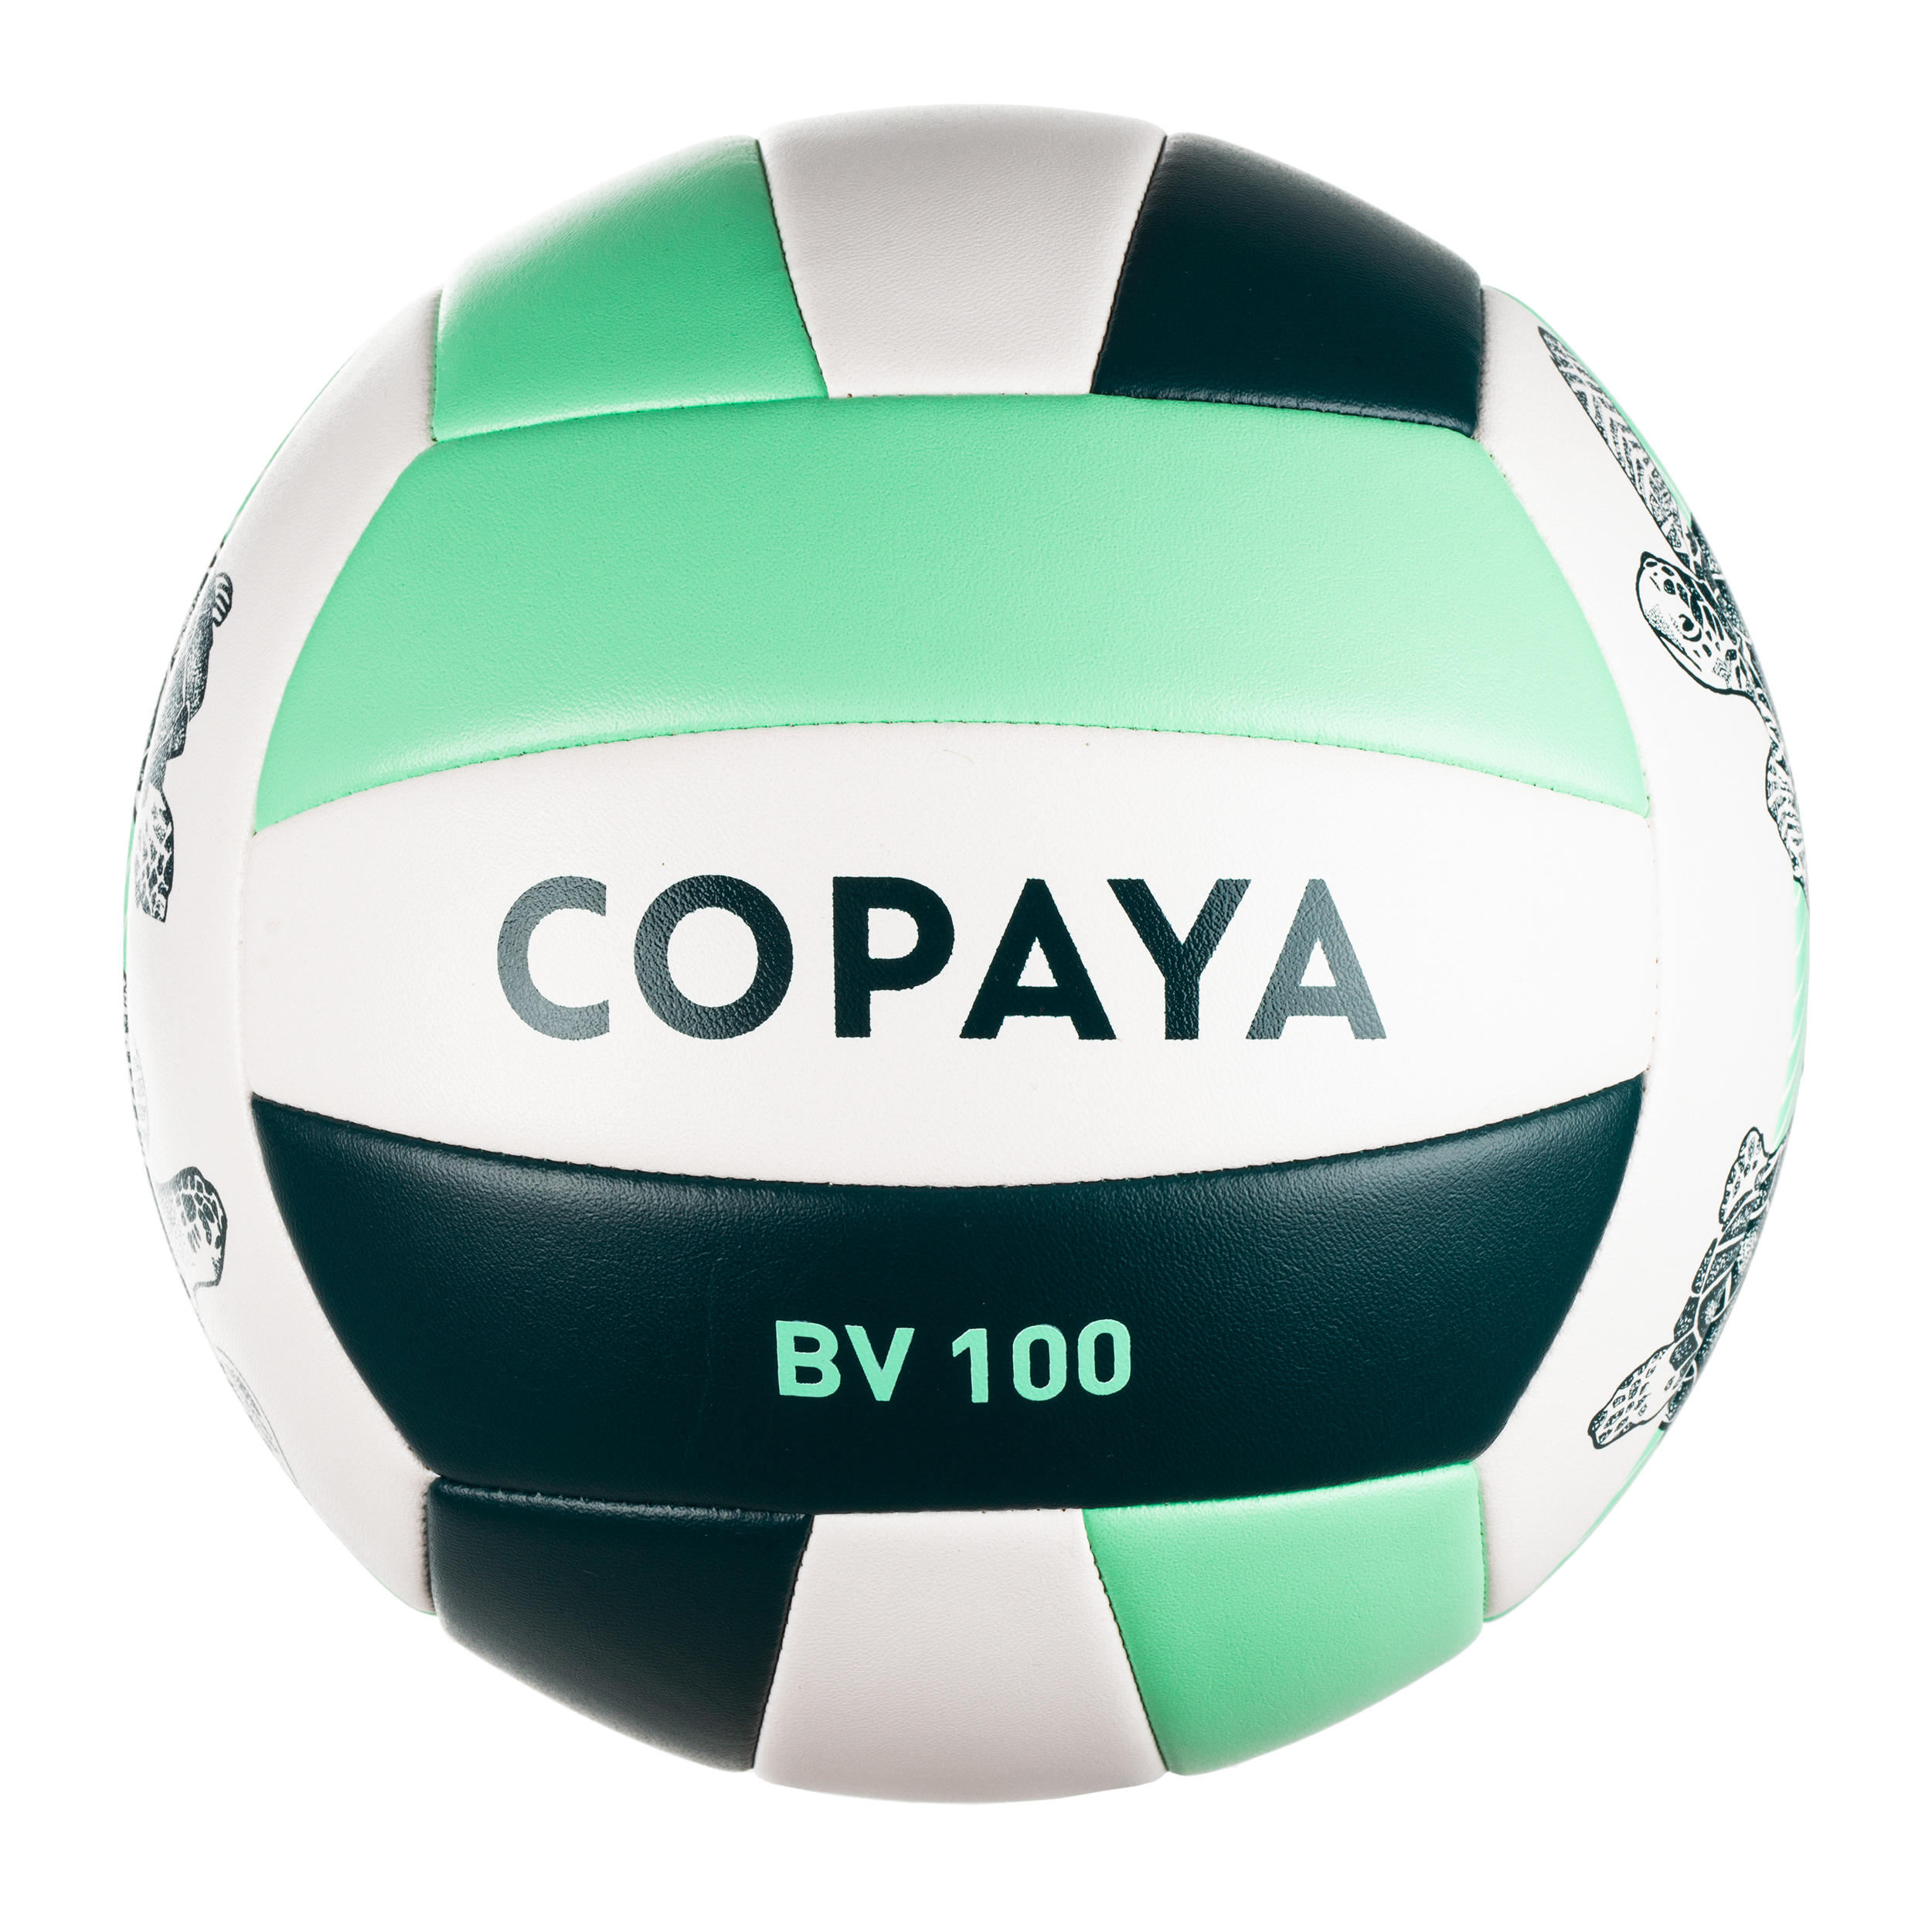 copaya volleyball